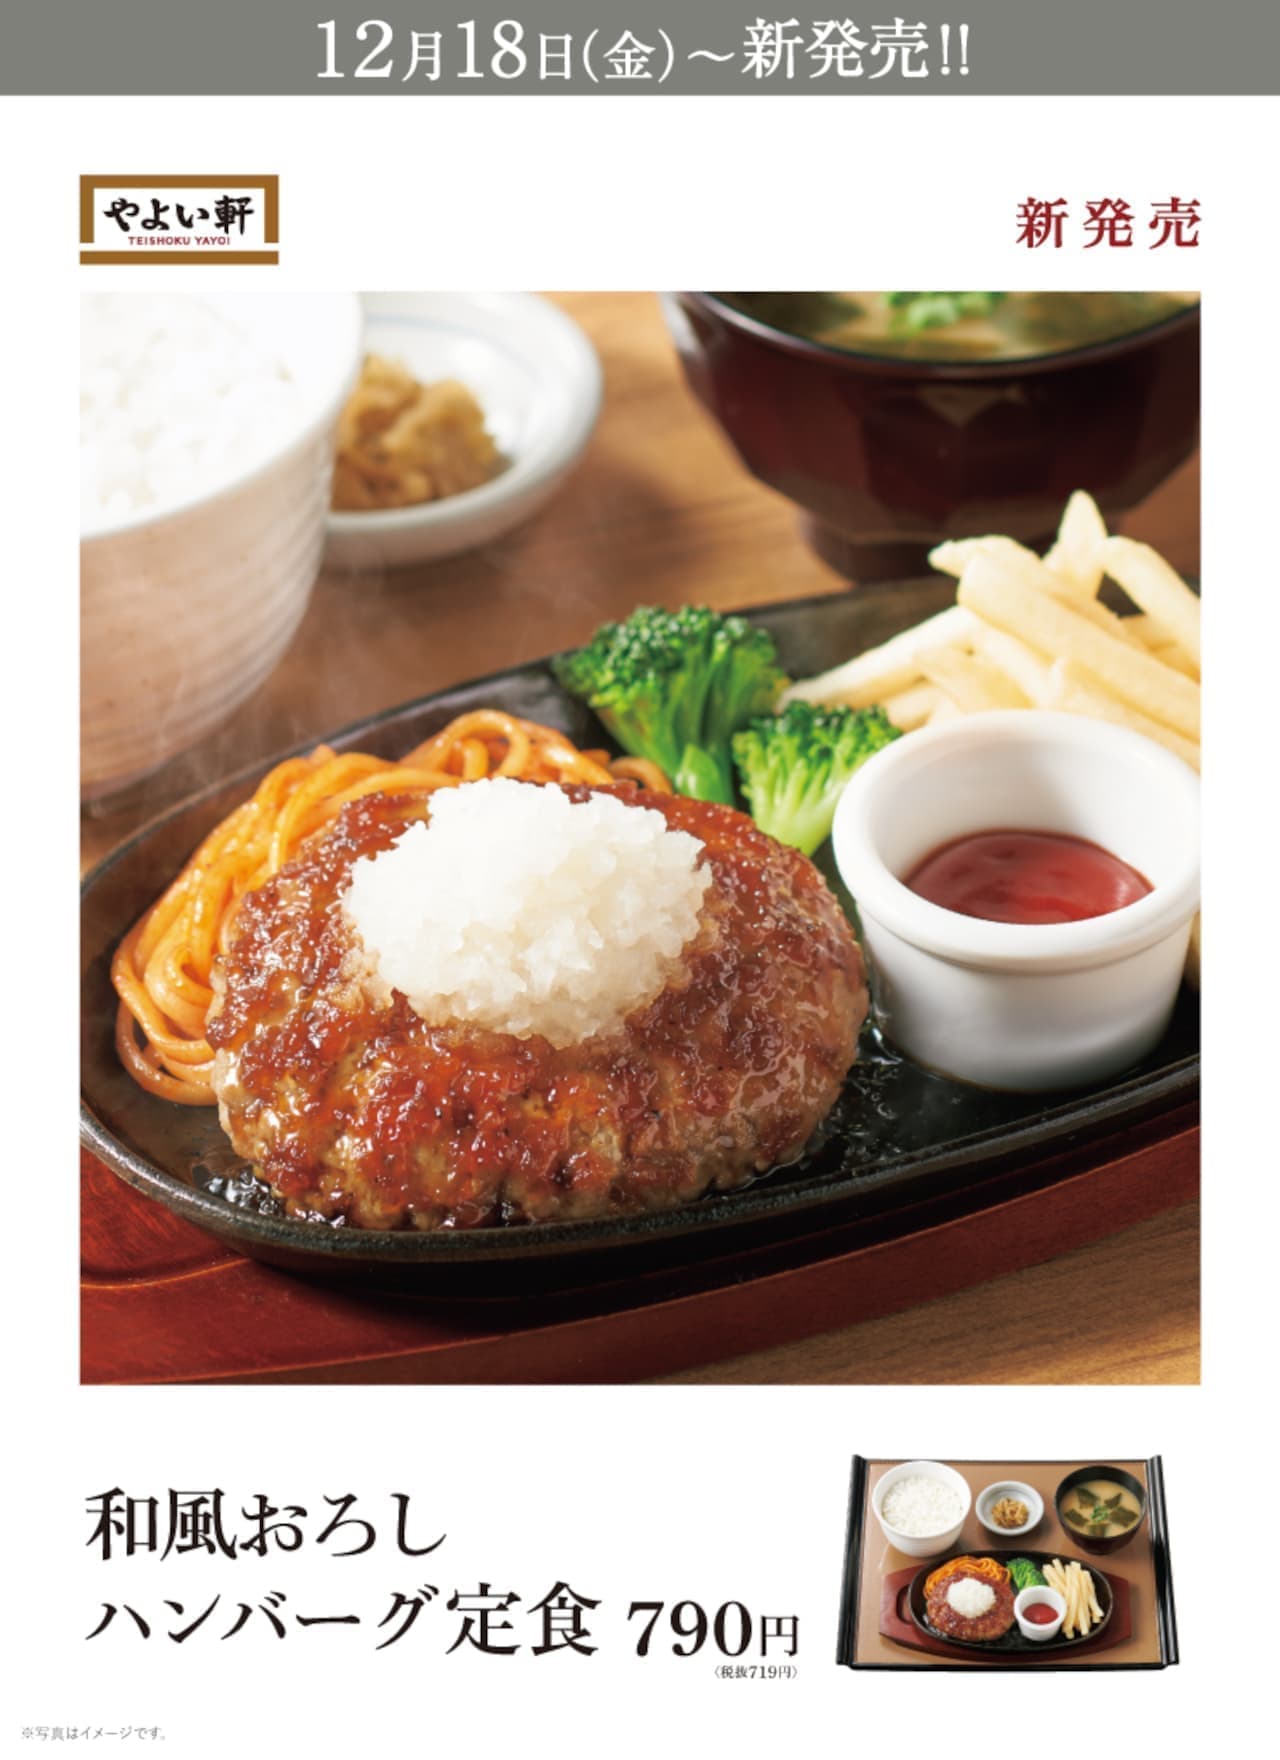 Yayoiken "Japanese-style grated hamburger set meal"